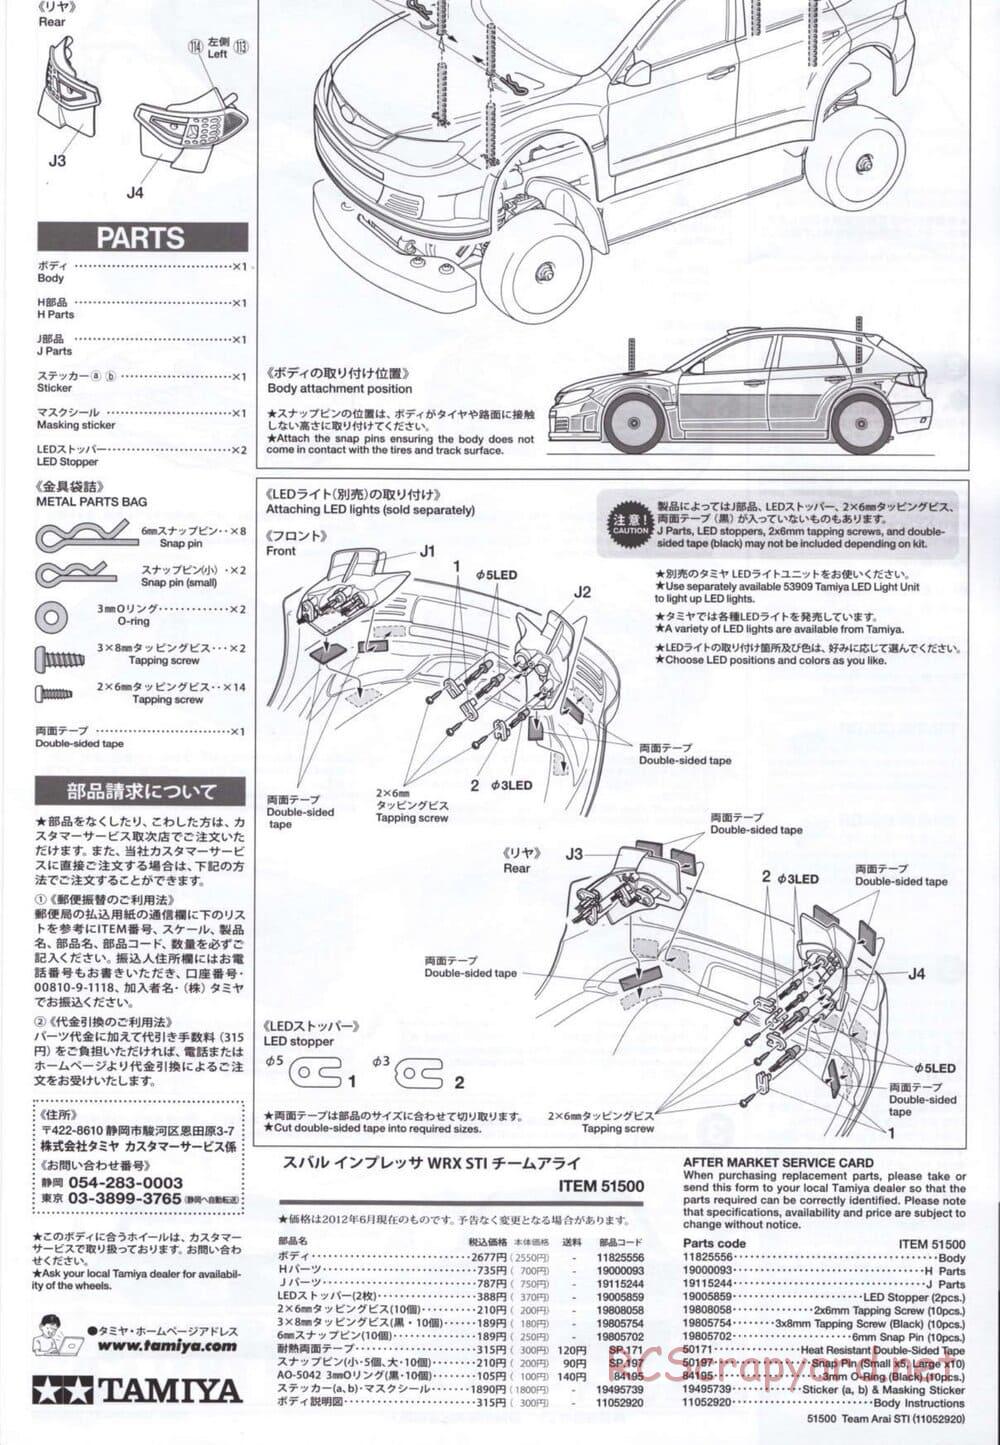 Tamiya - Subaru Impreza WRX STi Team Arai - XV-01 Chassis - Body Manual - Page 4